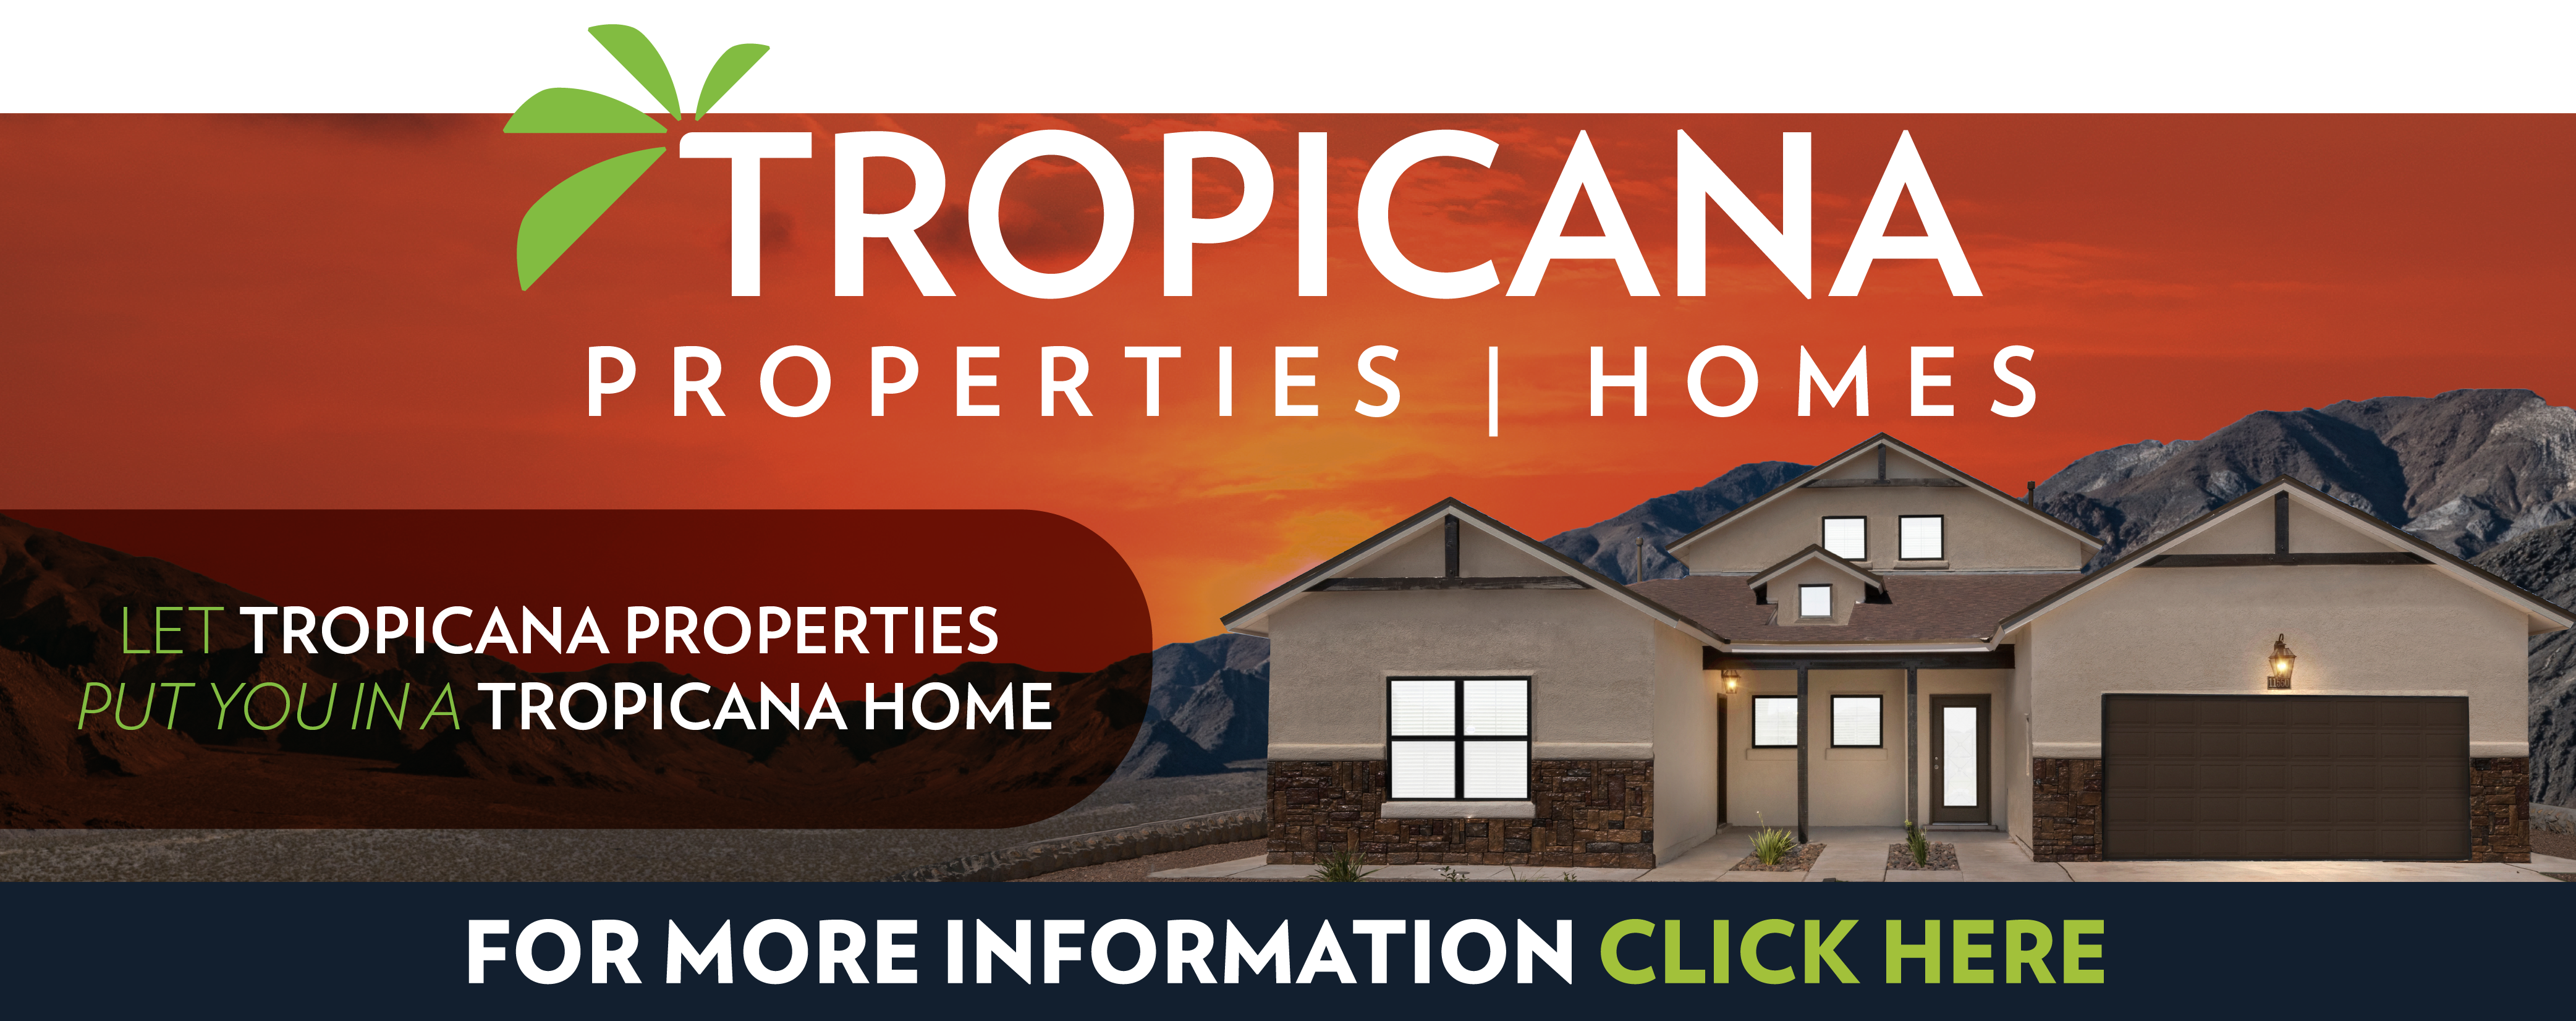 Let Tropicana Properties Put You in a Tropicana Home